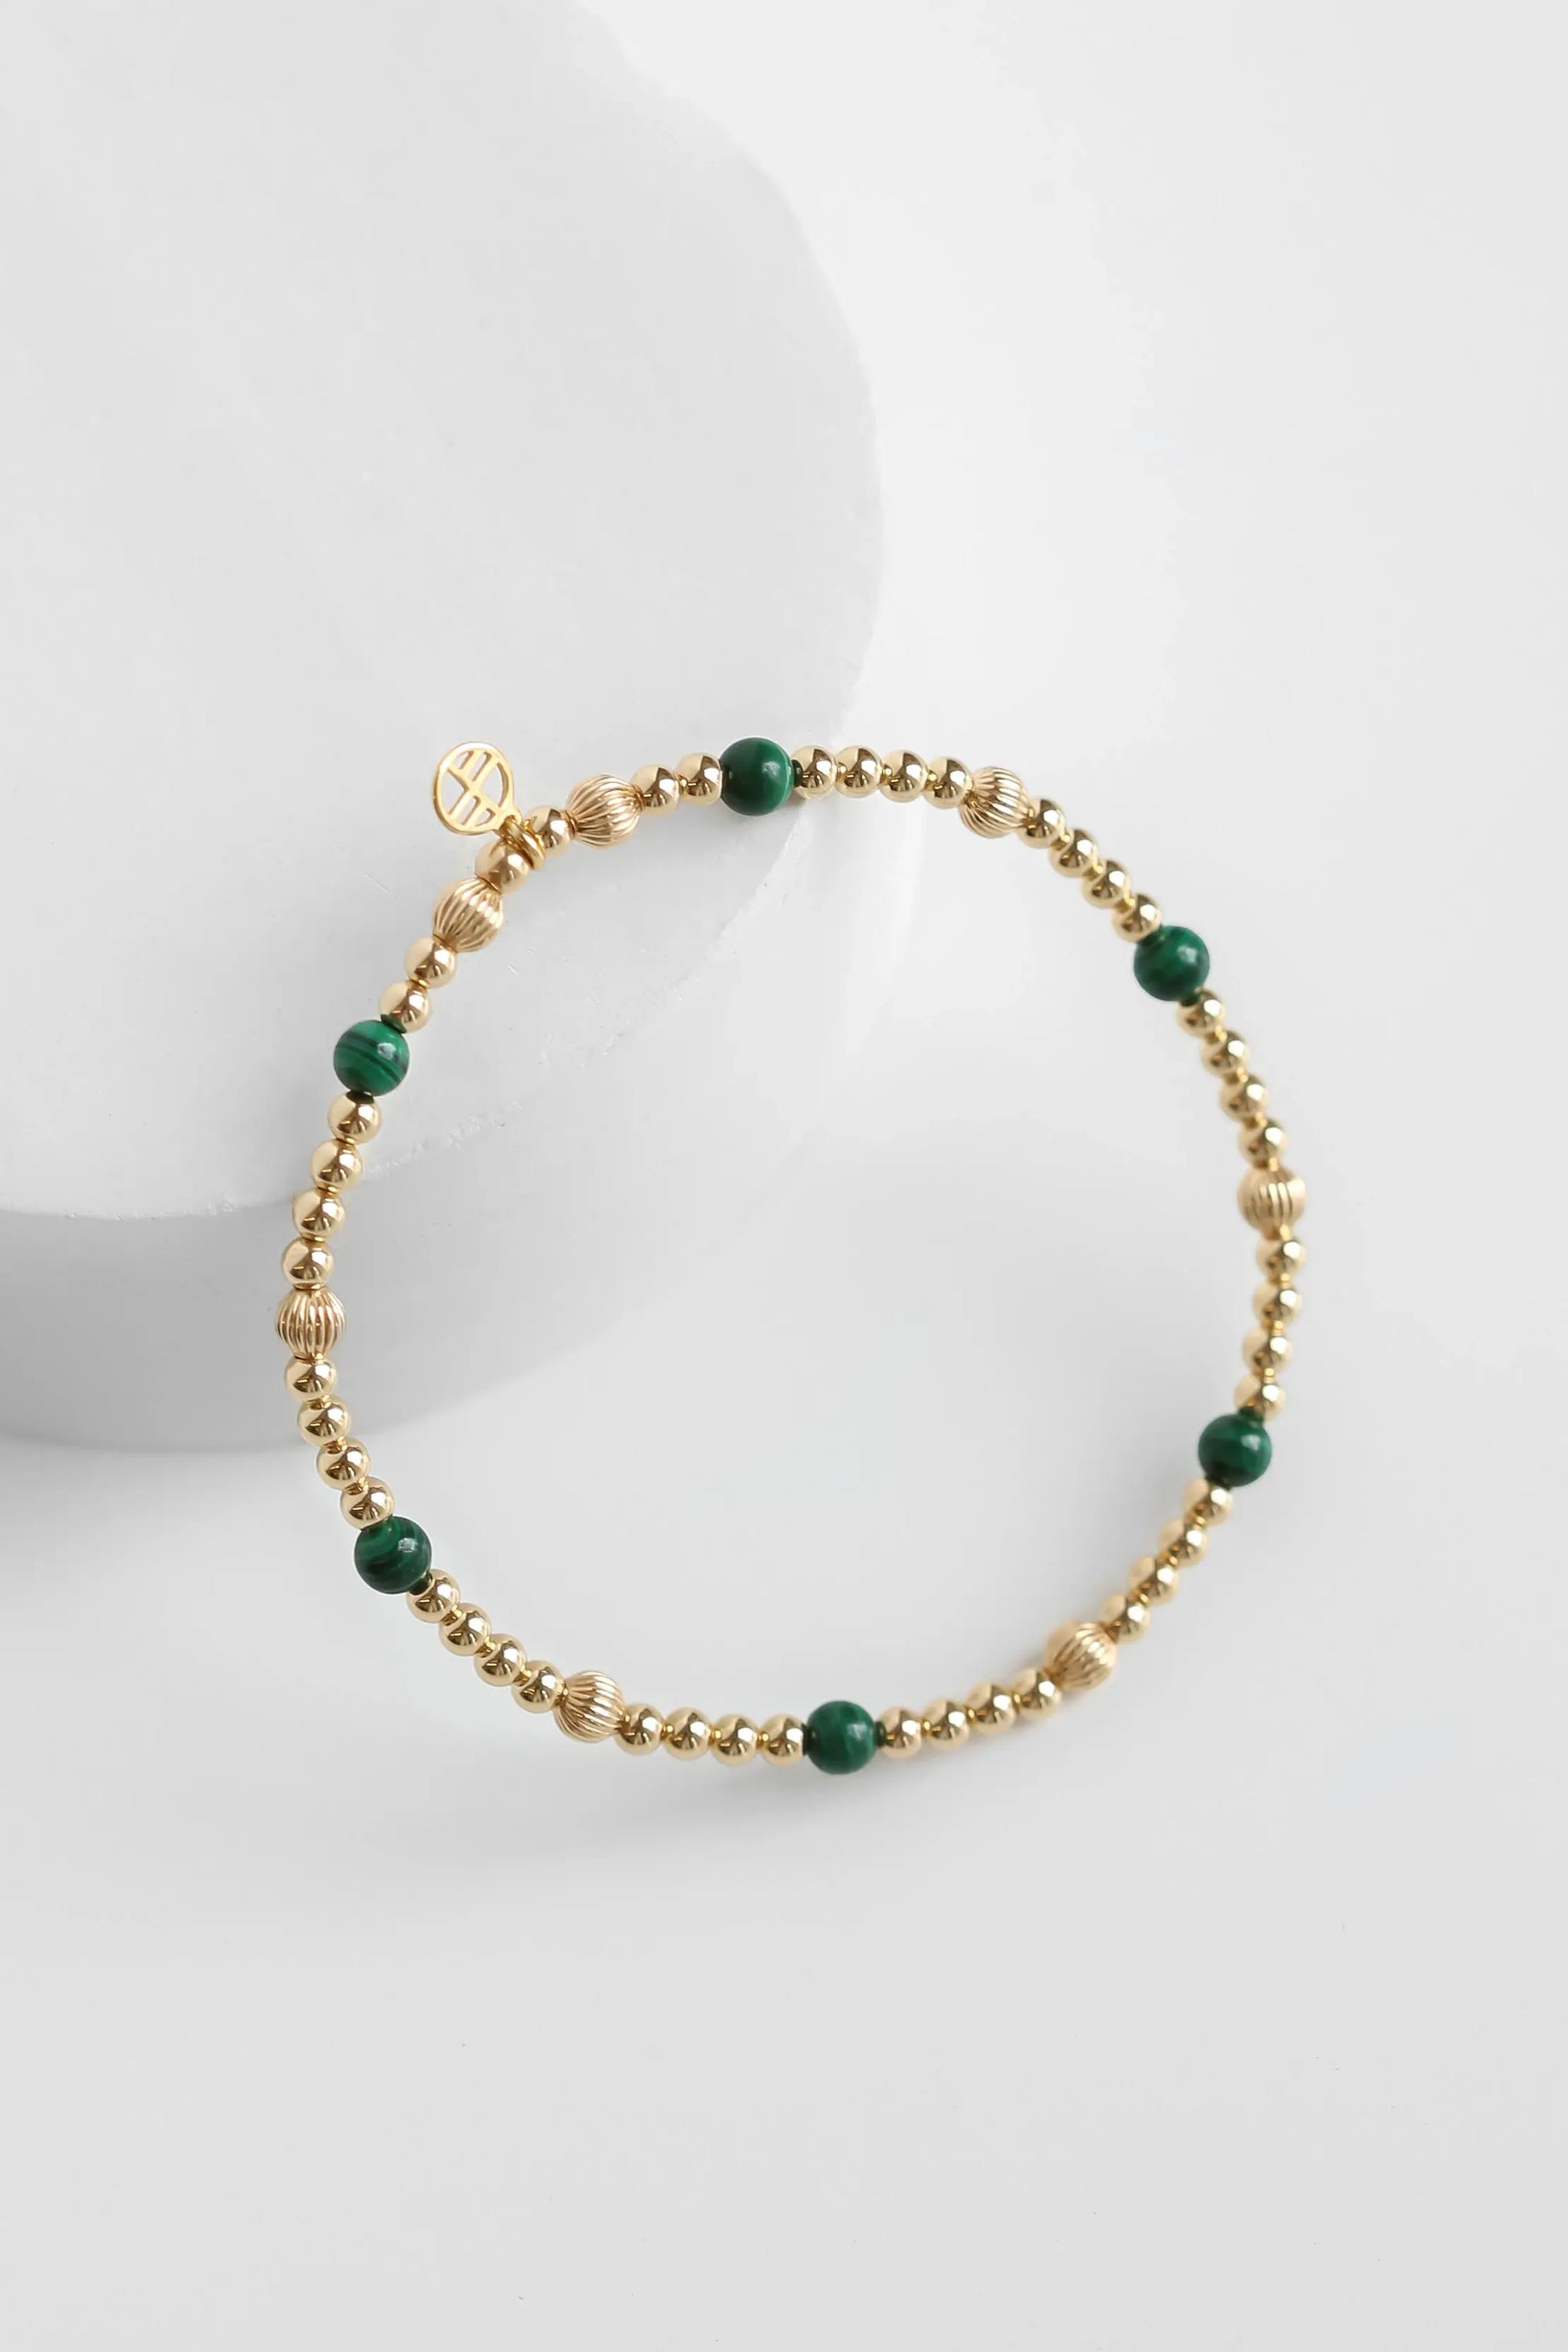 The    Woodstock Bracelet Malachite by  Francesca Jewellery from the Bracelets Collection.